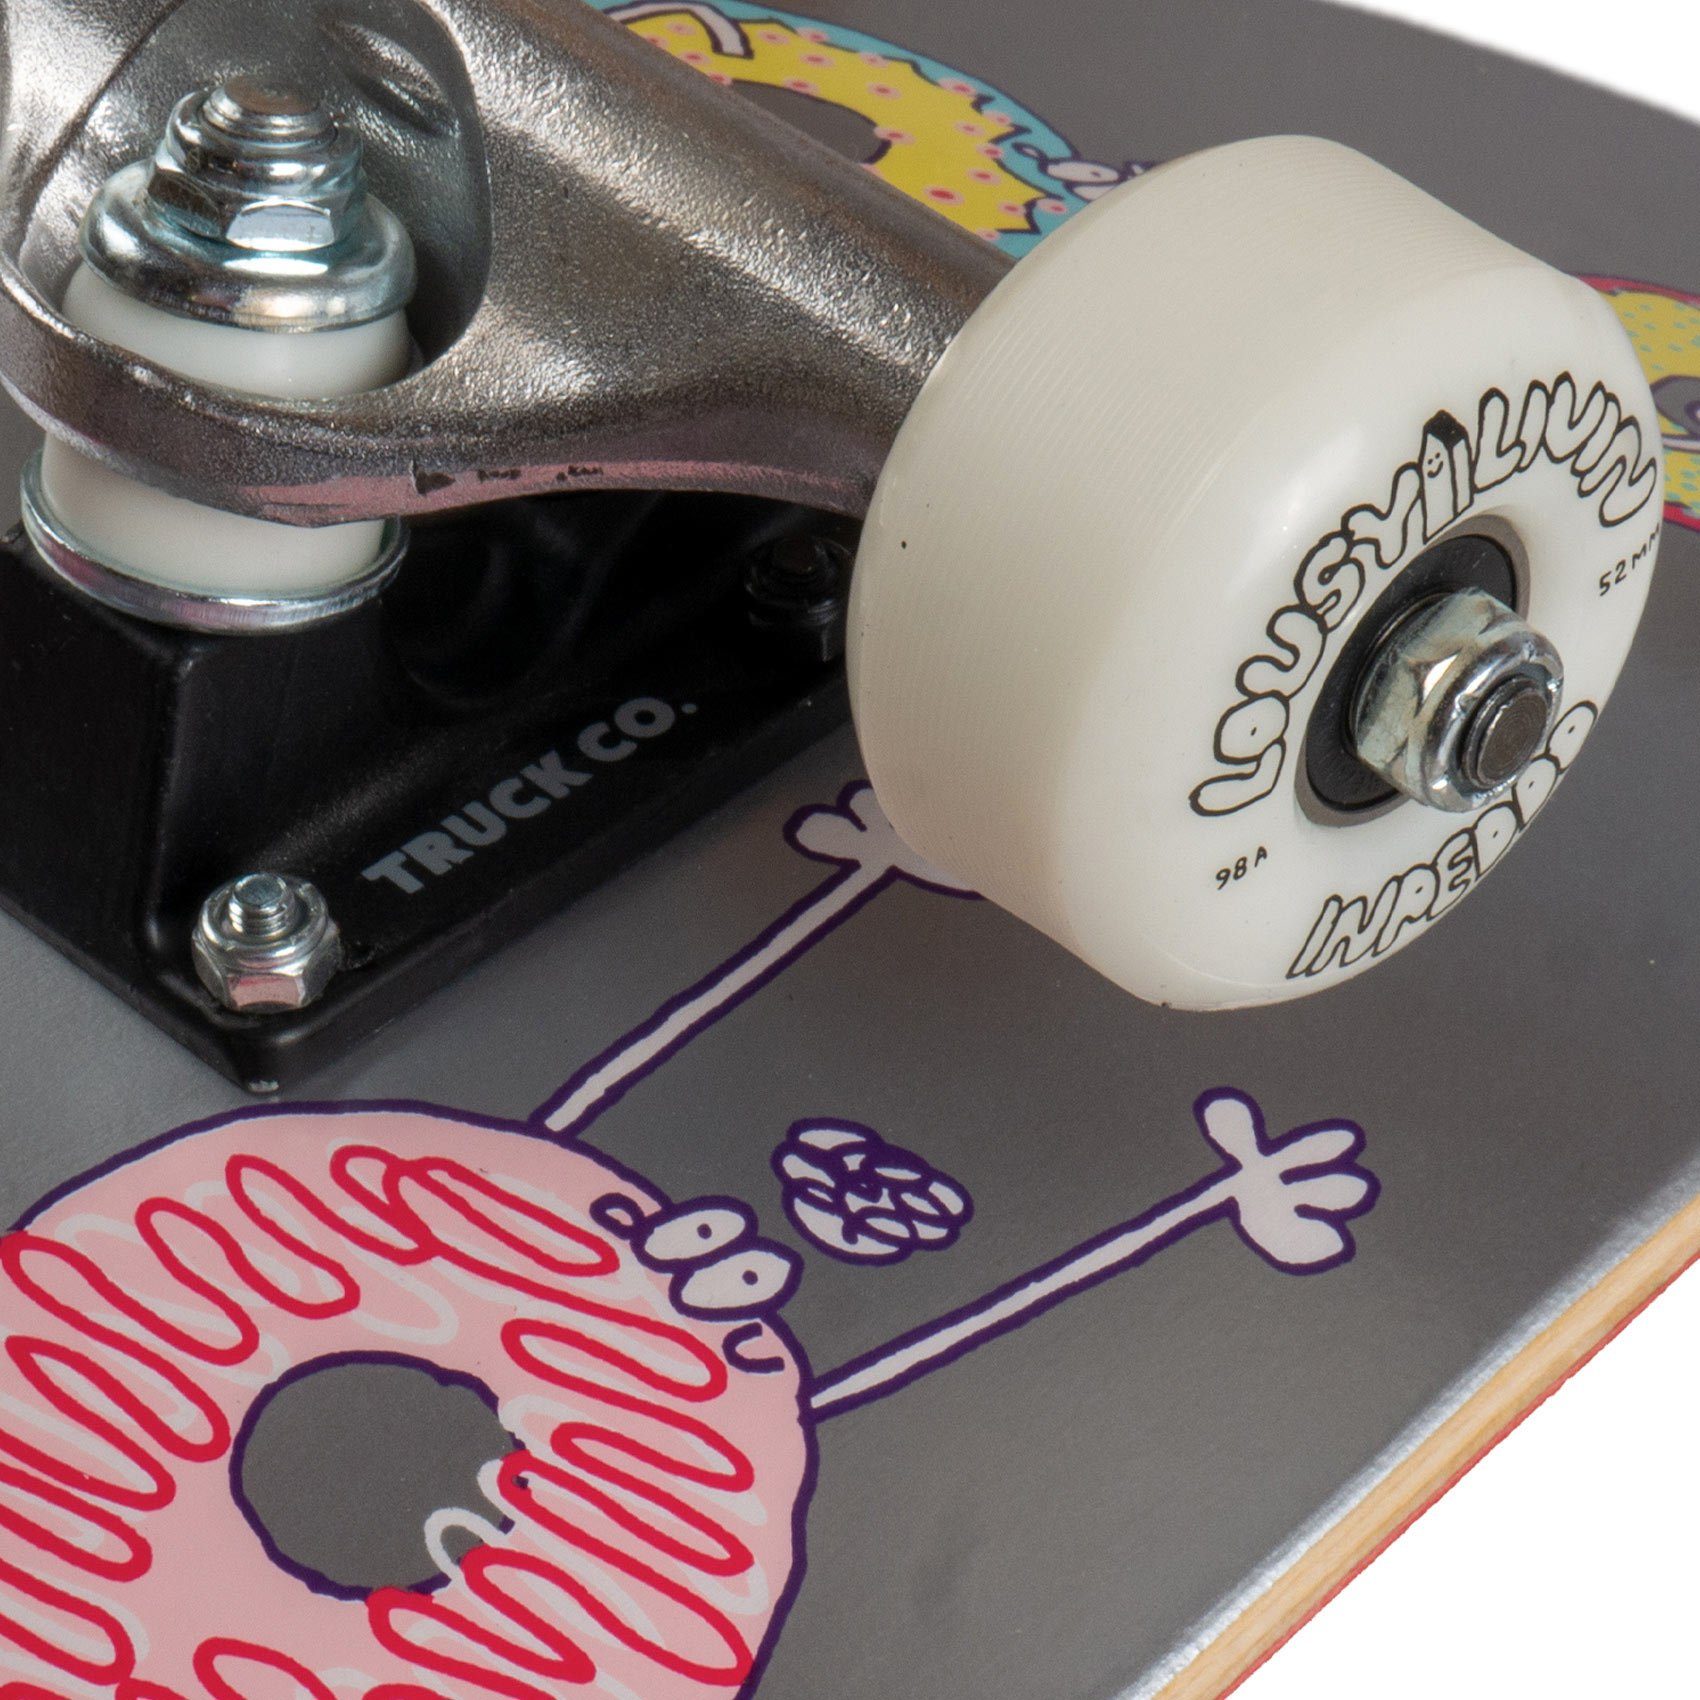 Skateboard Inpeddo Donut - Livin x silver Lousy 7.875'